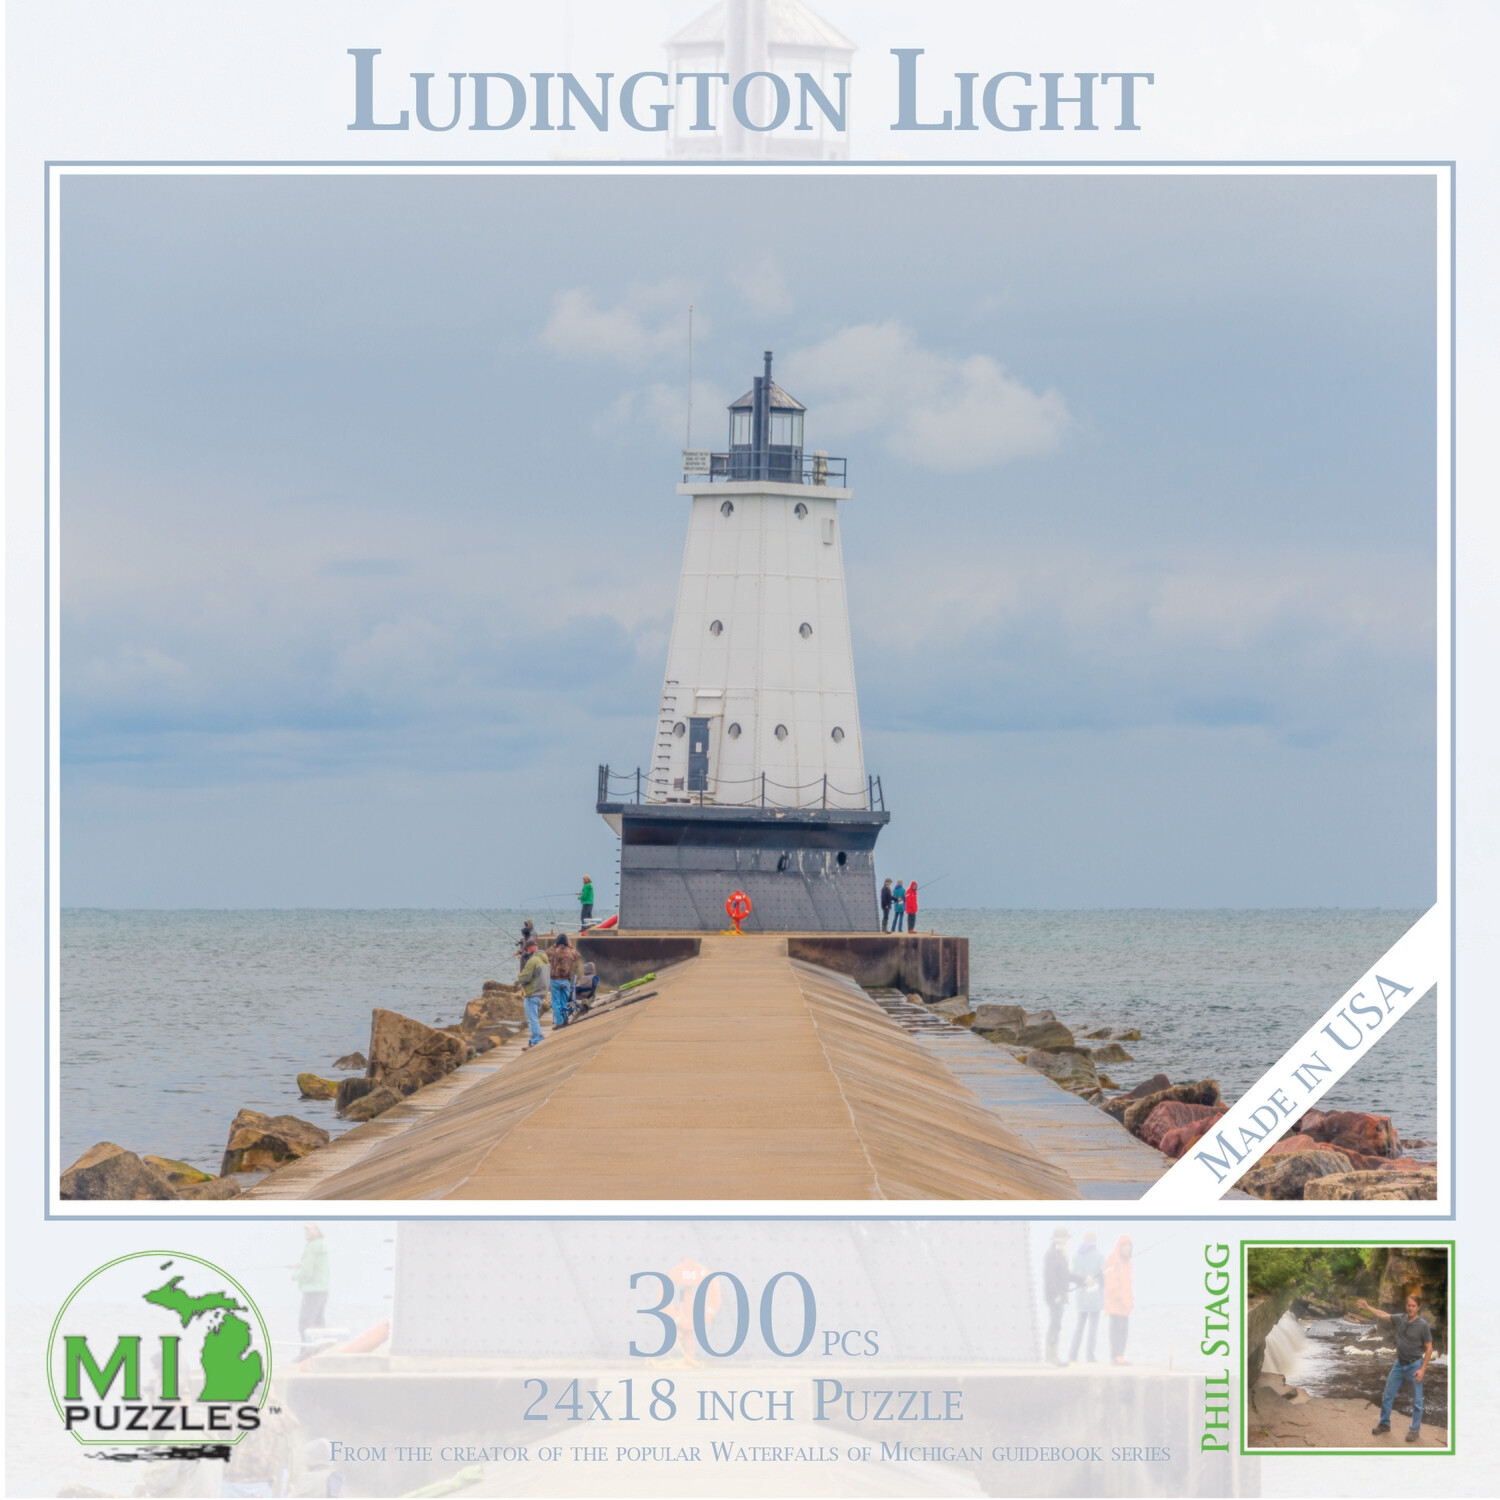 LUDINGTON LIGHT